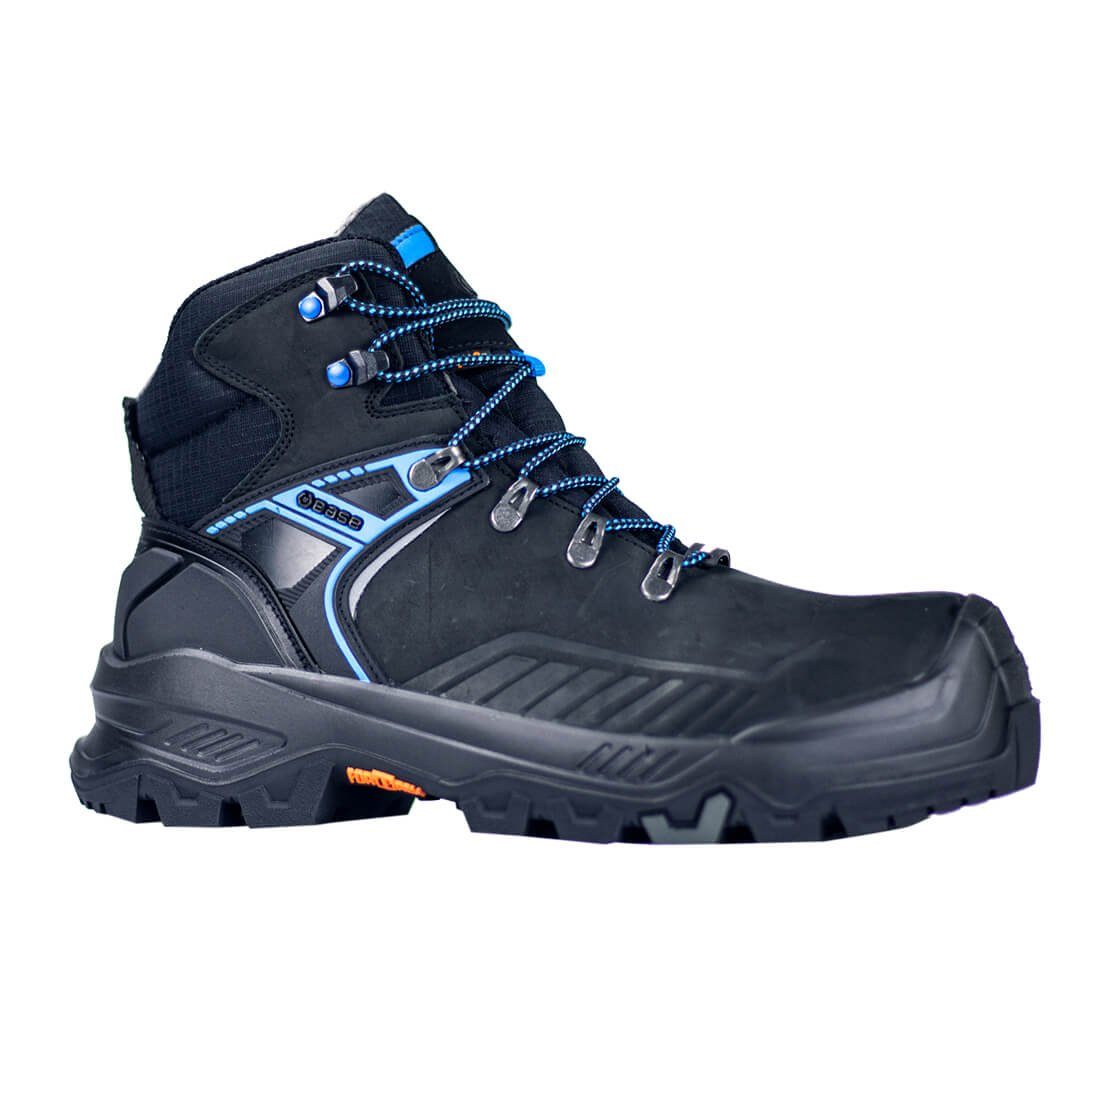 Base Footwear Sicherheitsschuhe S3 B1603 - T-FORT Kälteisoliert Sicherheitsschuh